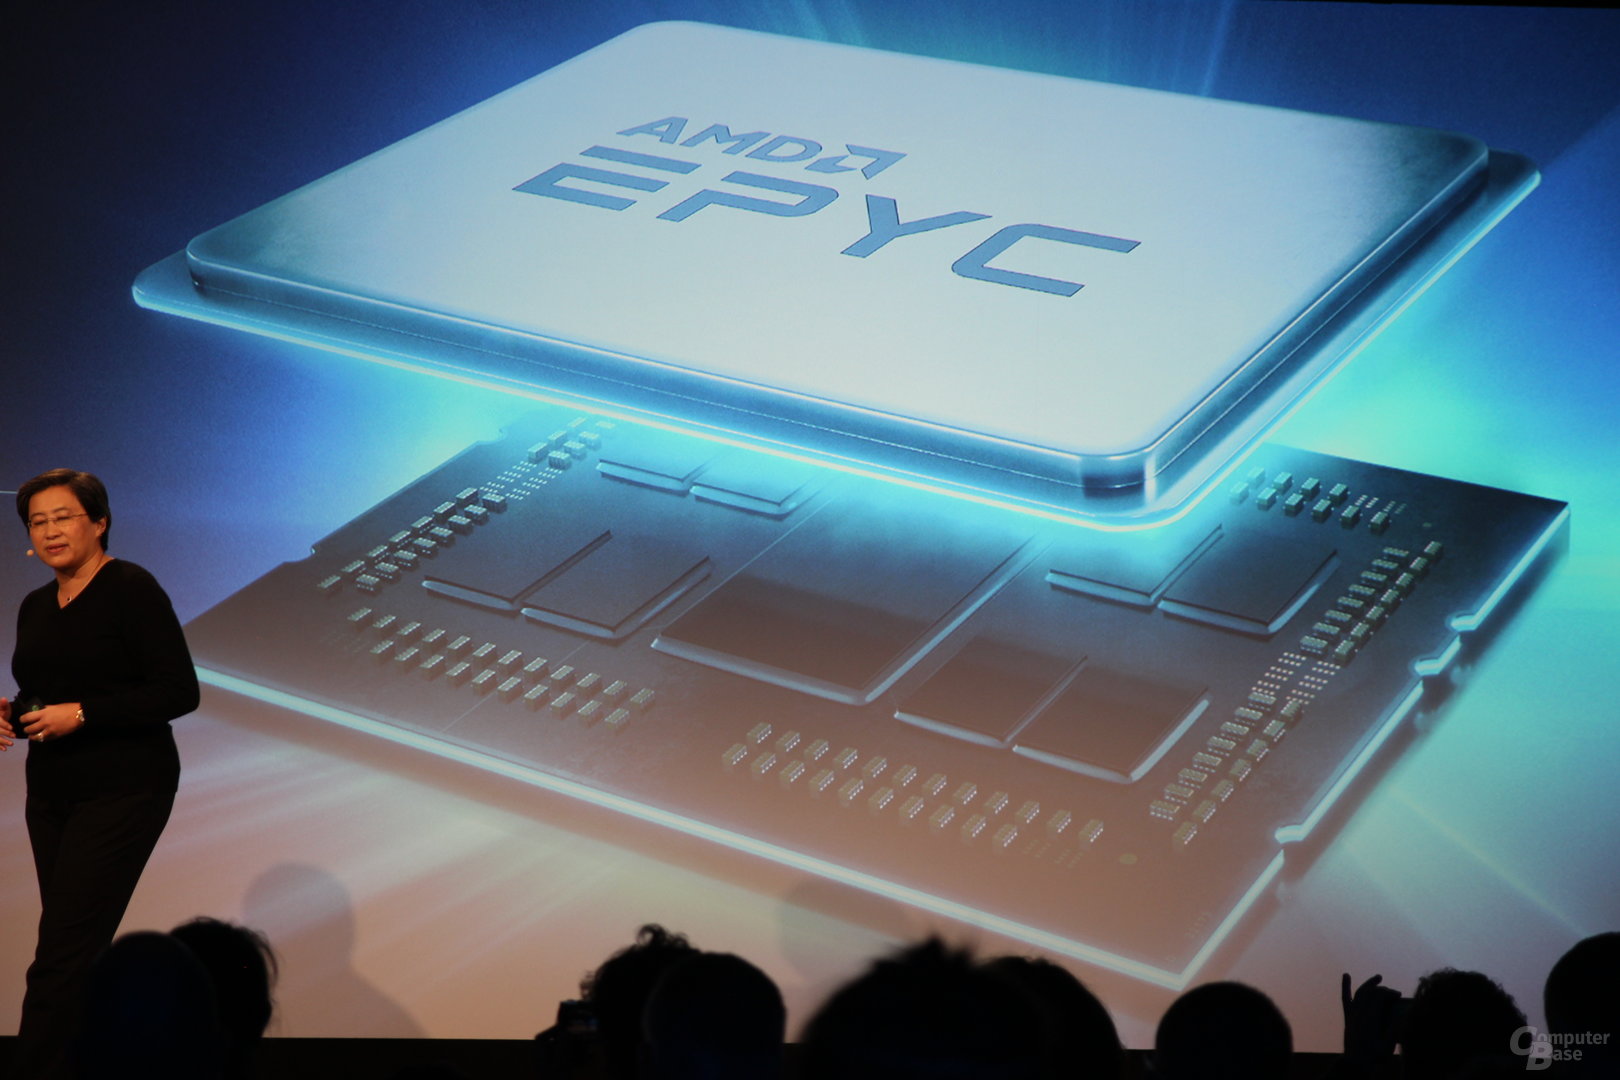 AMD Epyc 2 Rome mit 64 Kernen